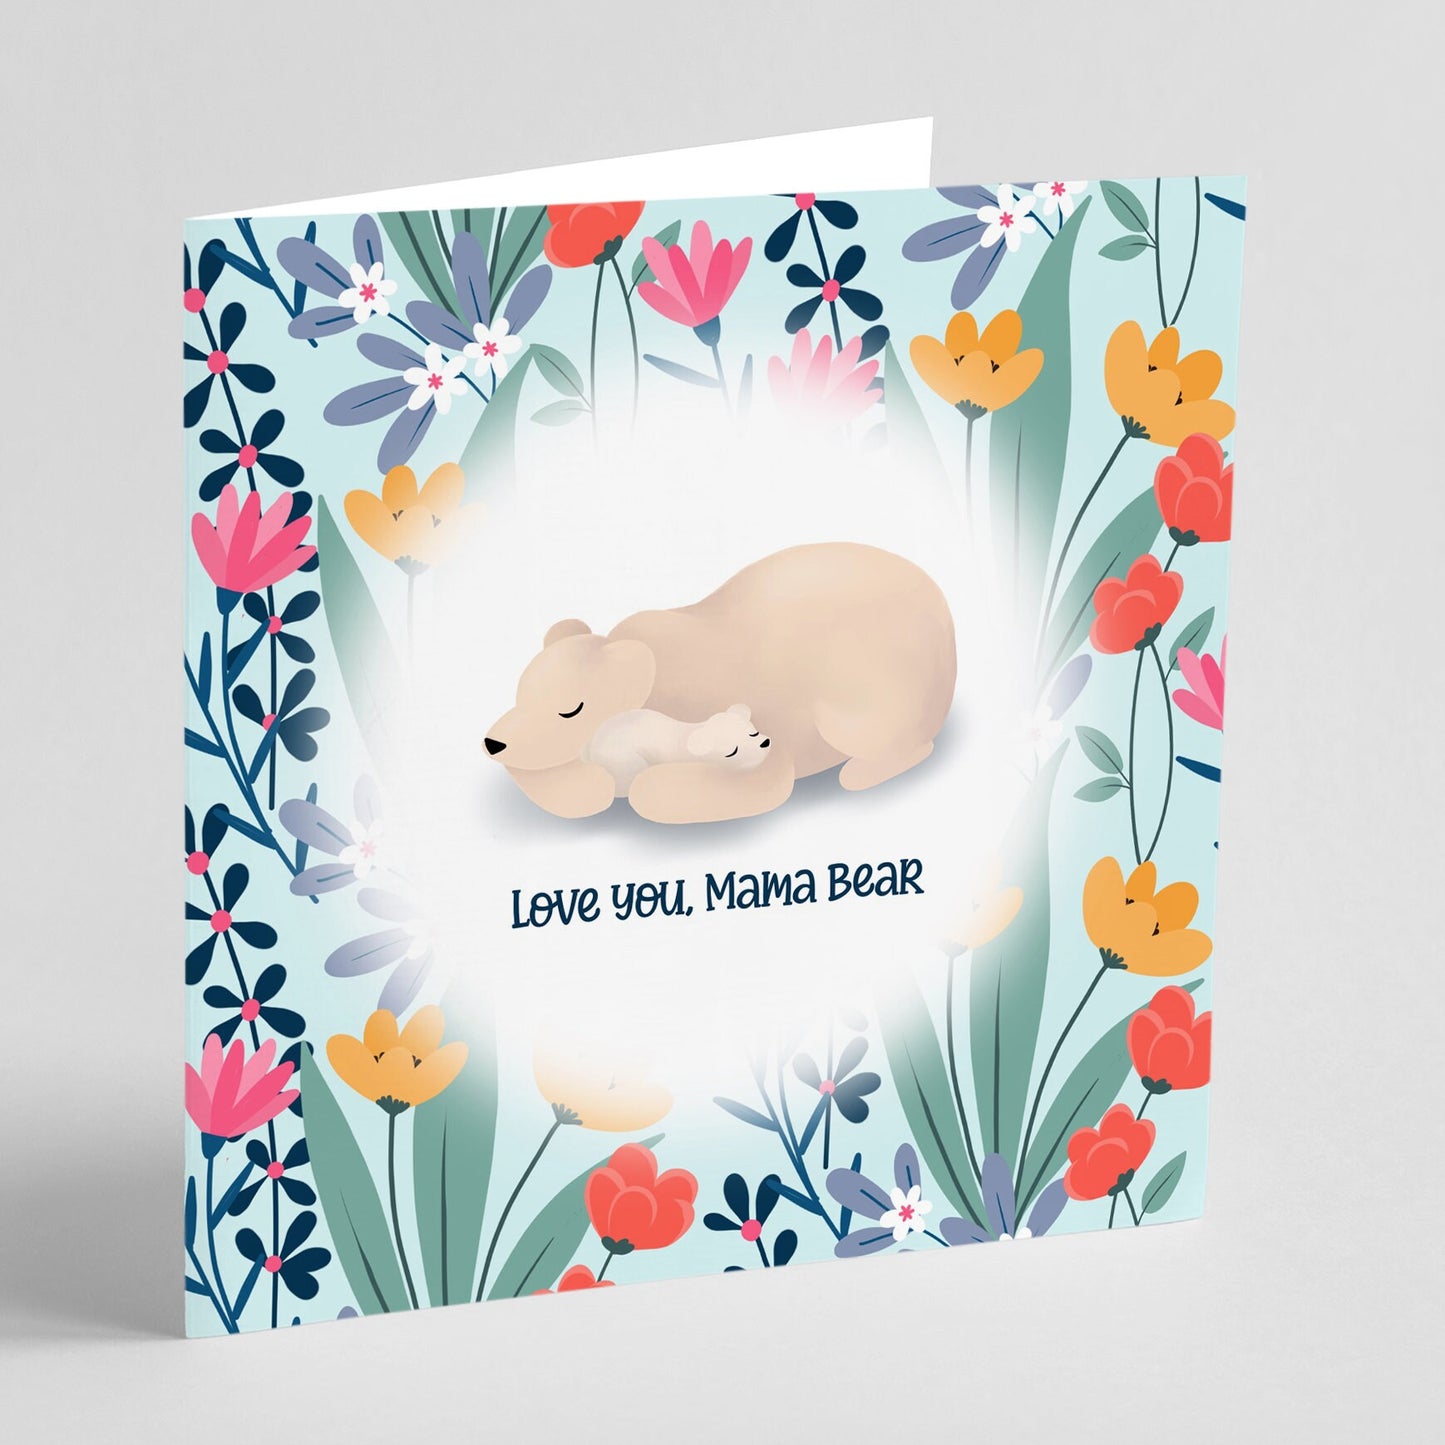 Love You Mama Bear, Sleeping - Mother's Day Greeting Card